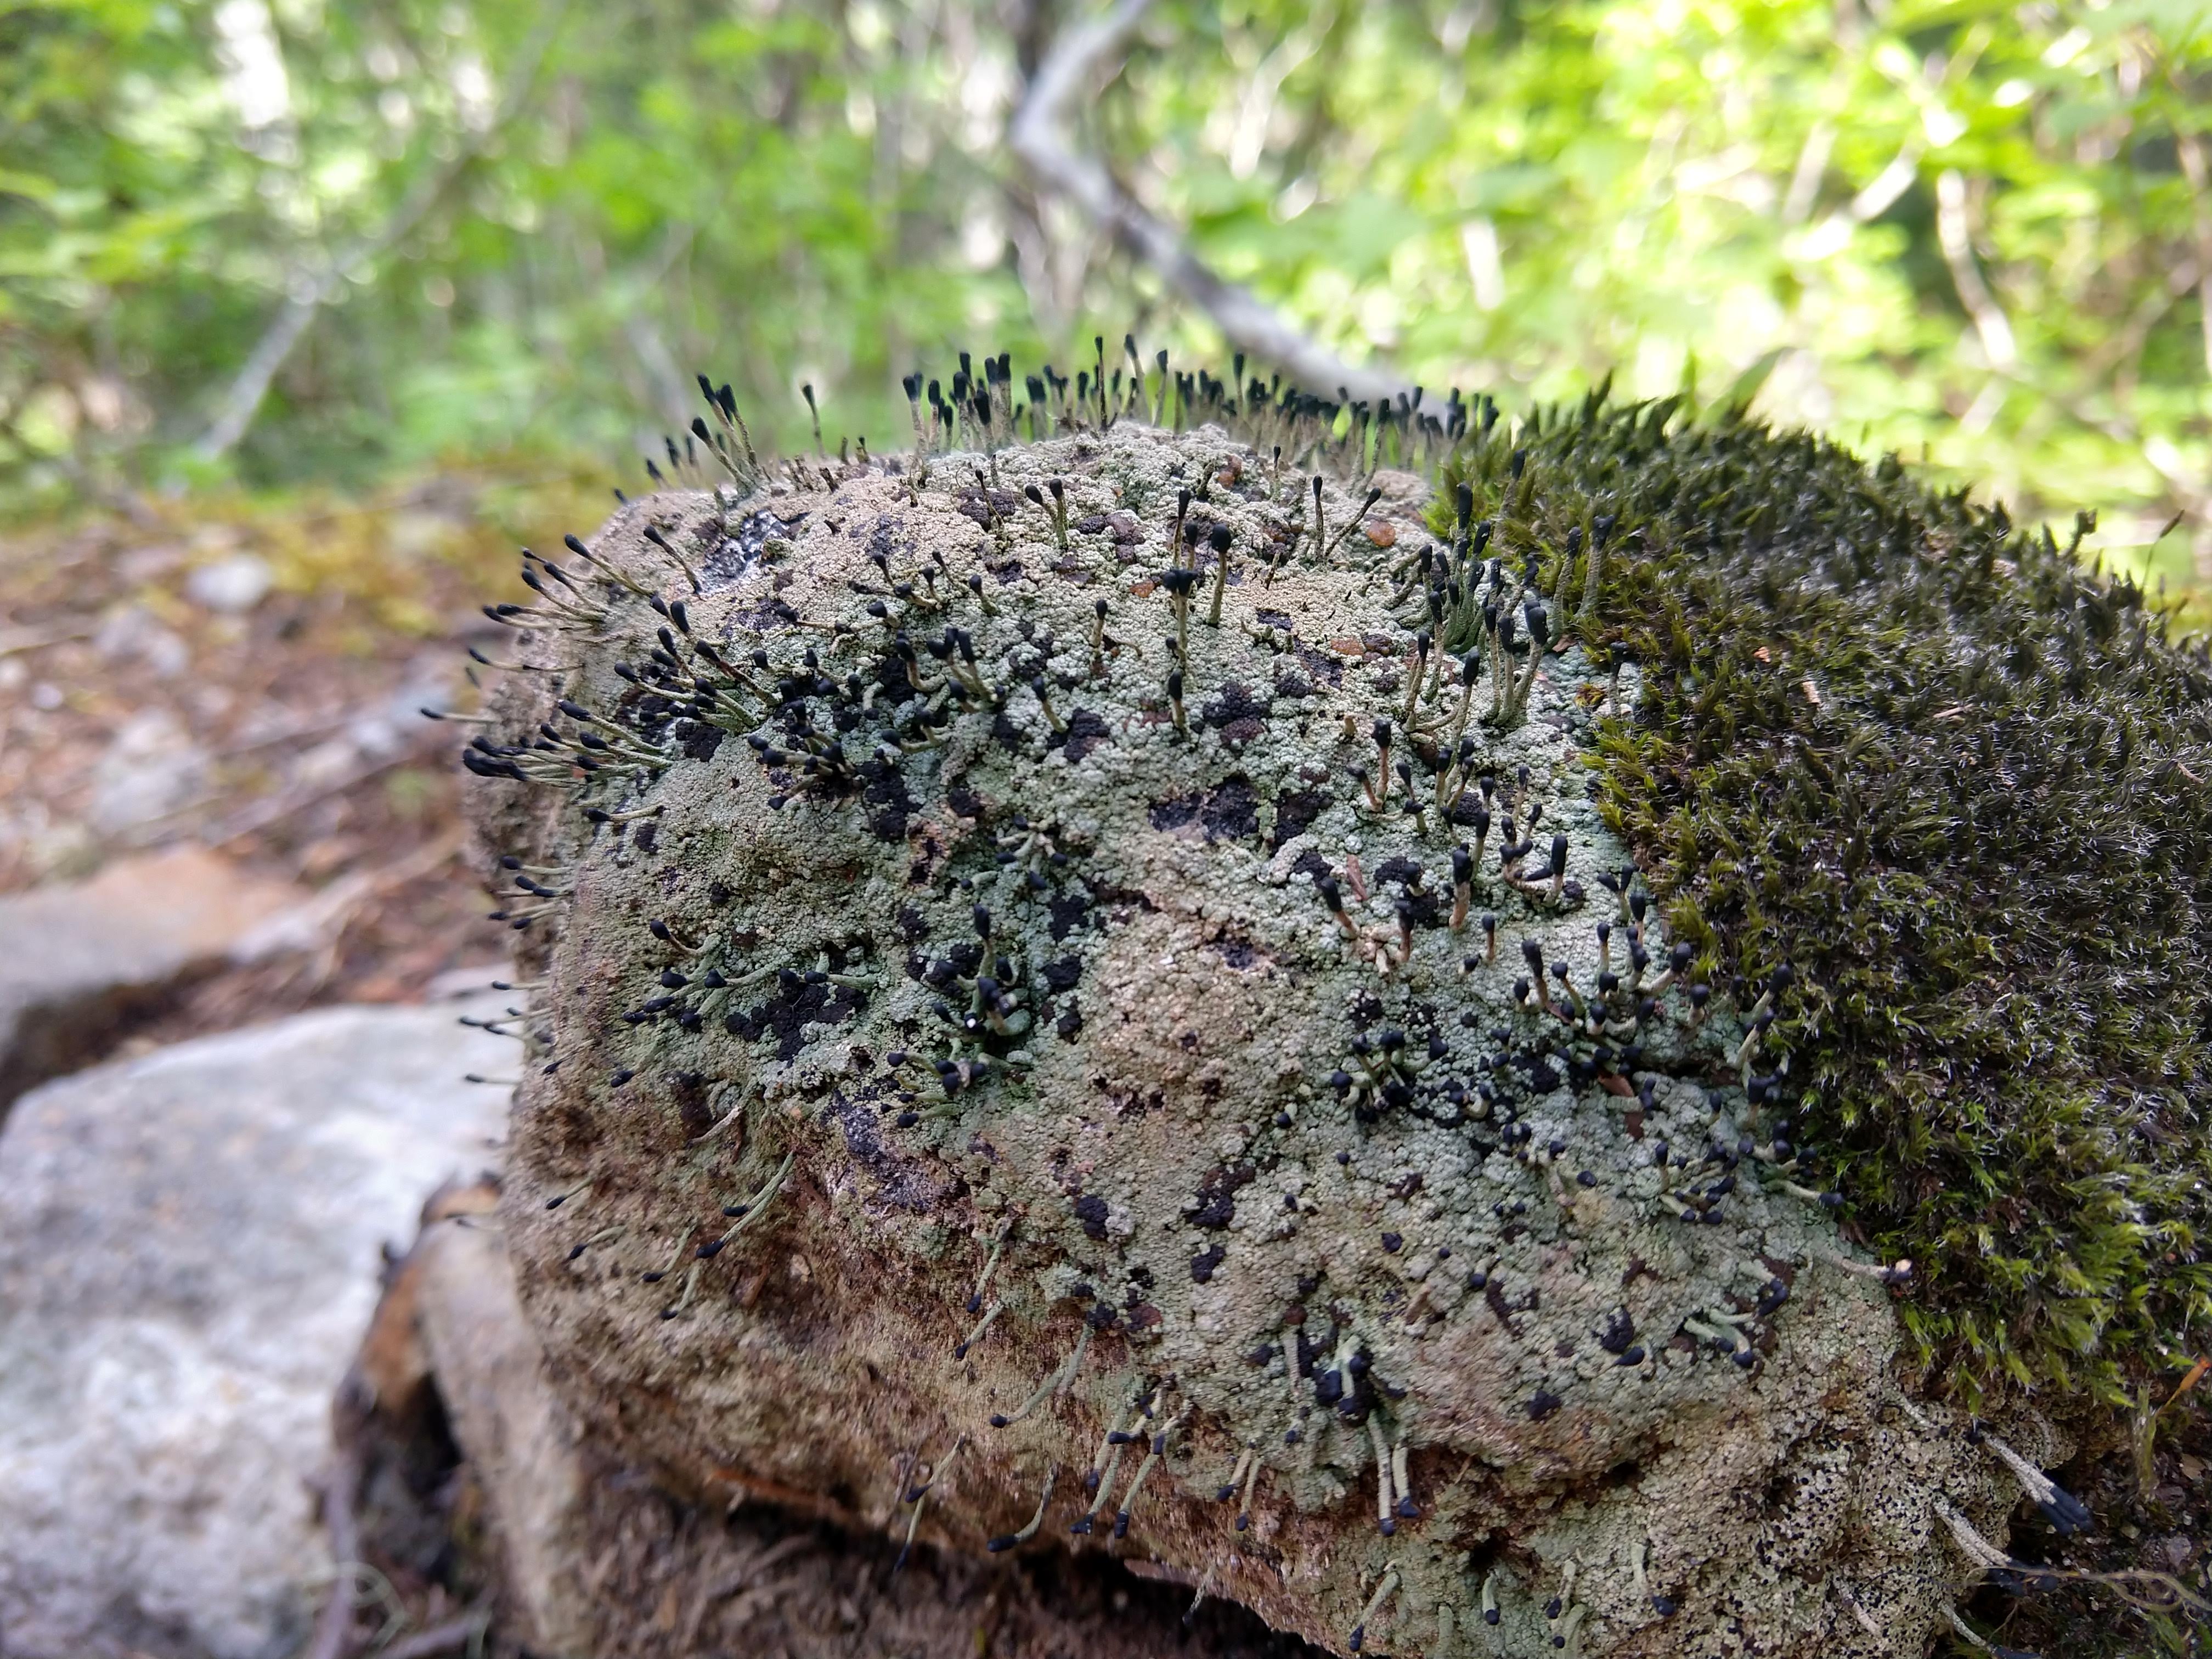 A fruticose lichen growing on a rock